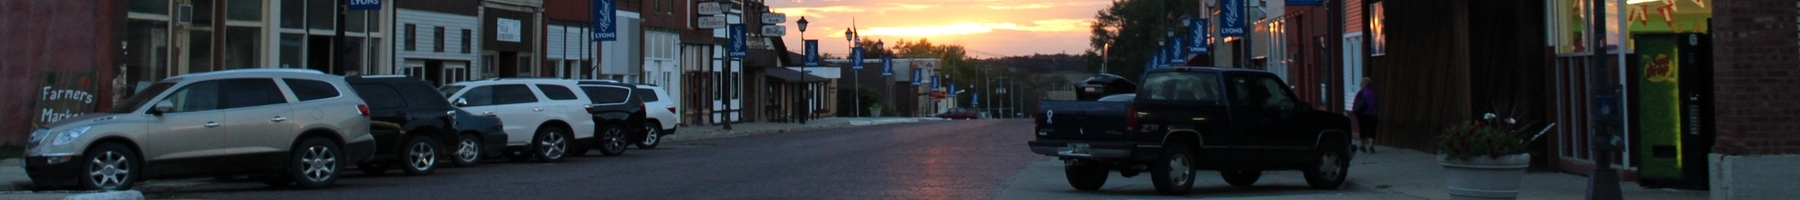 main street in Lyons, Nebraska